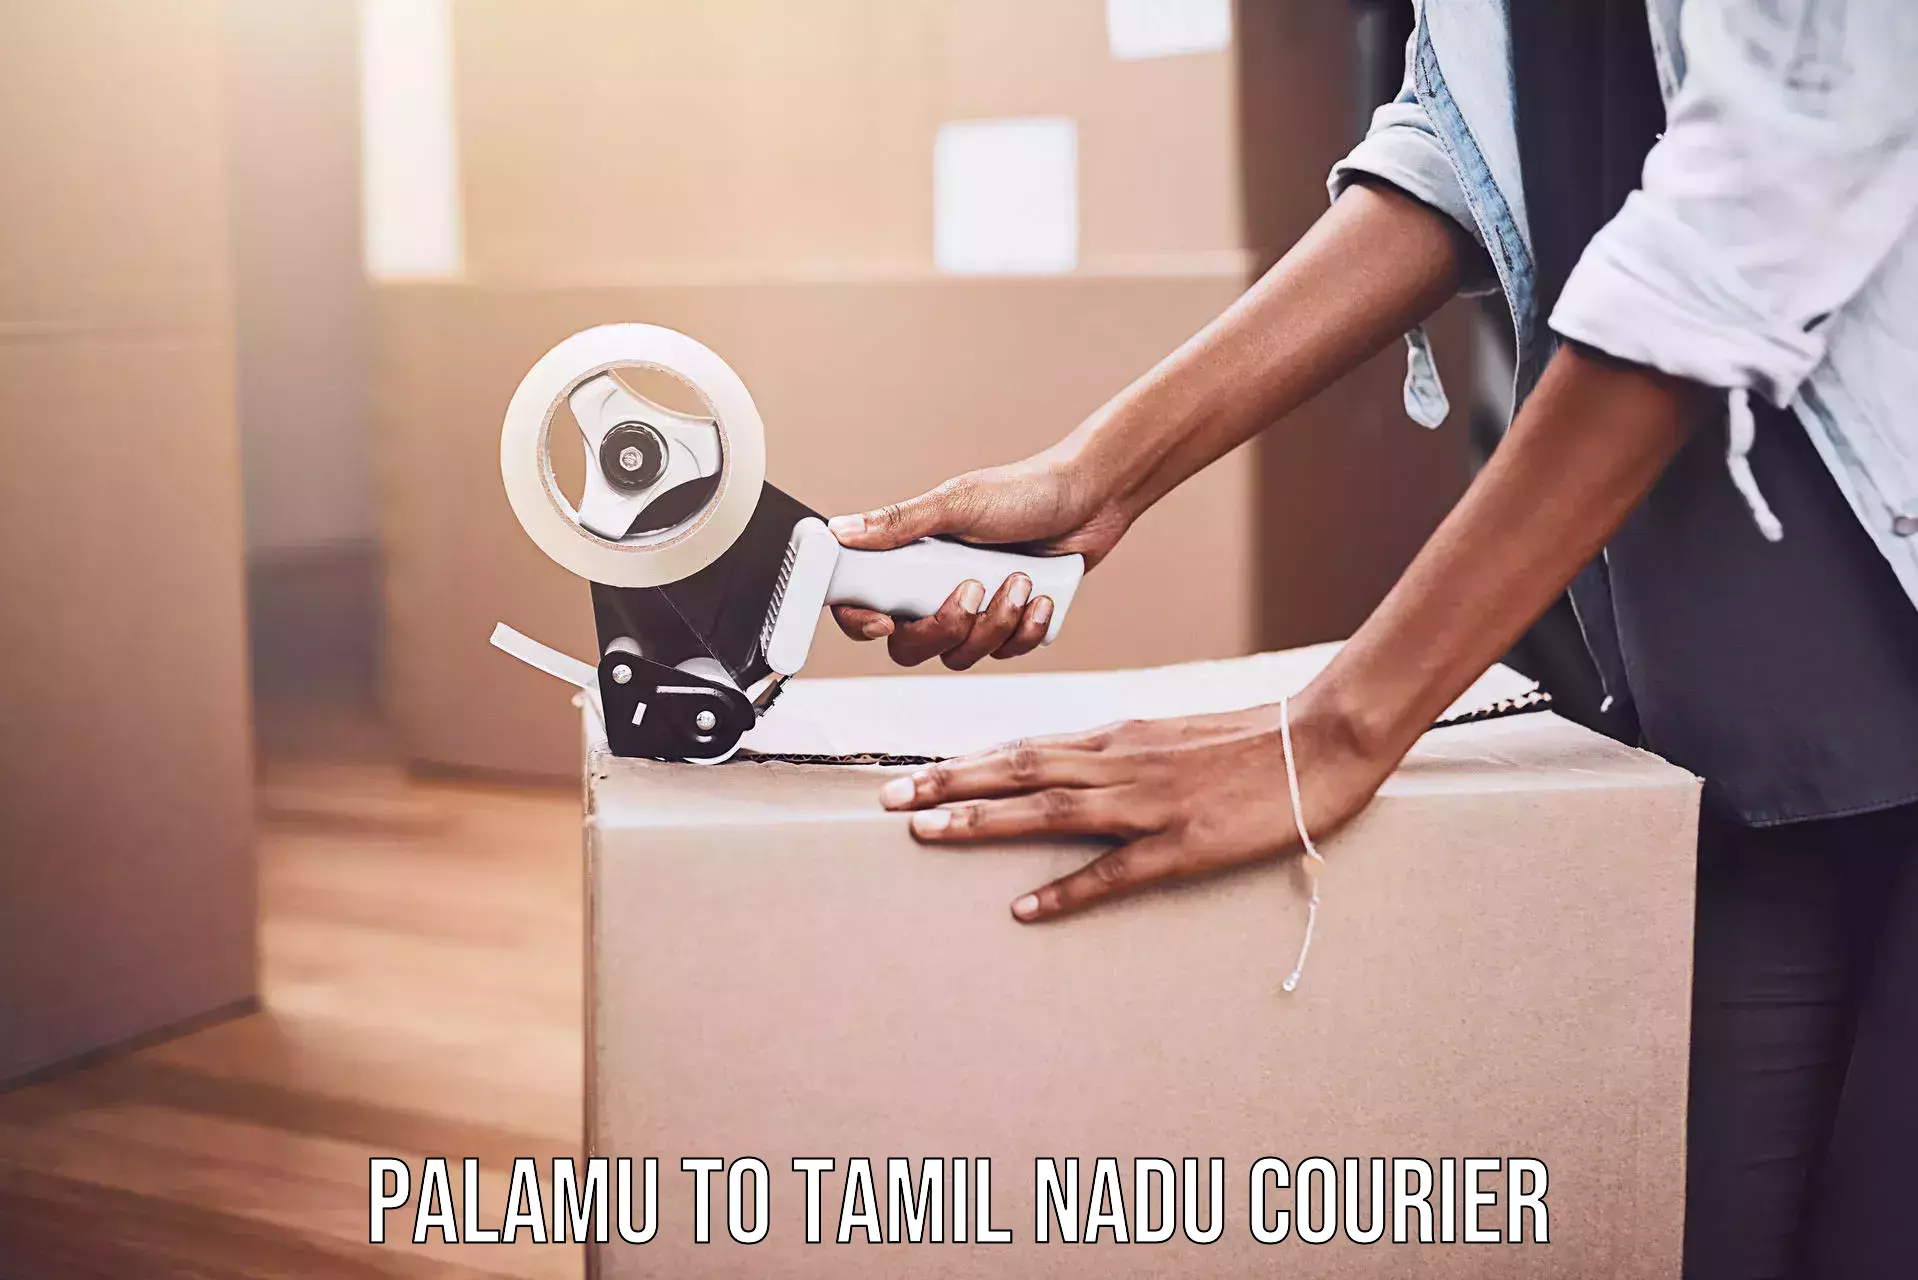 Efficient shipping platforms Palamu to Thiruvadanai